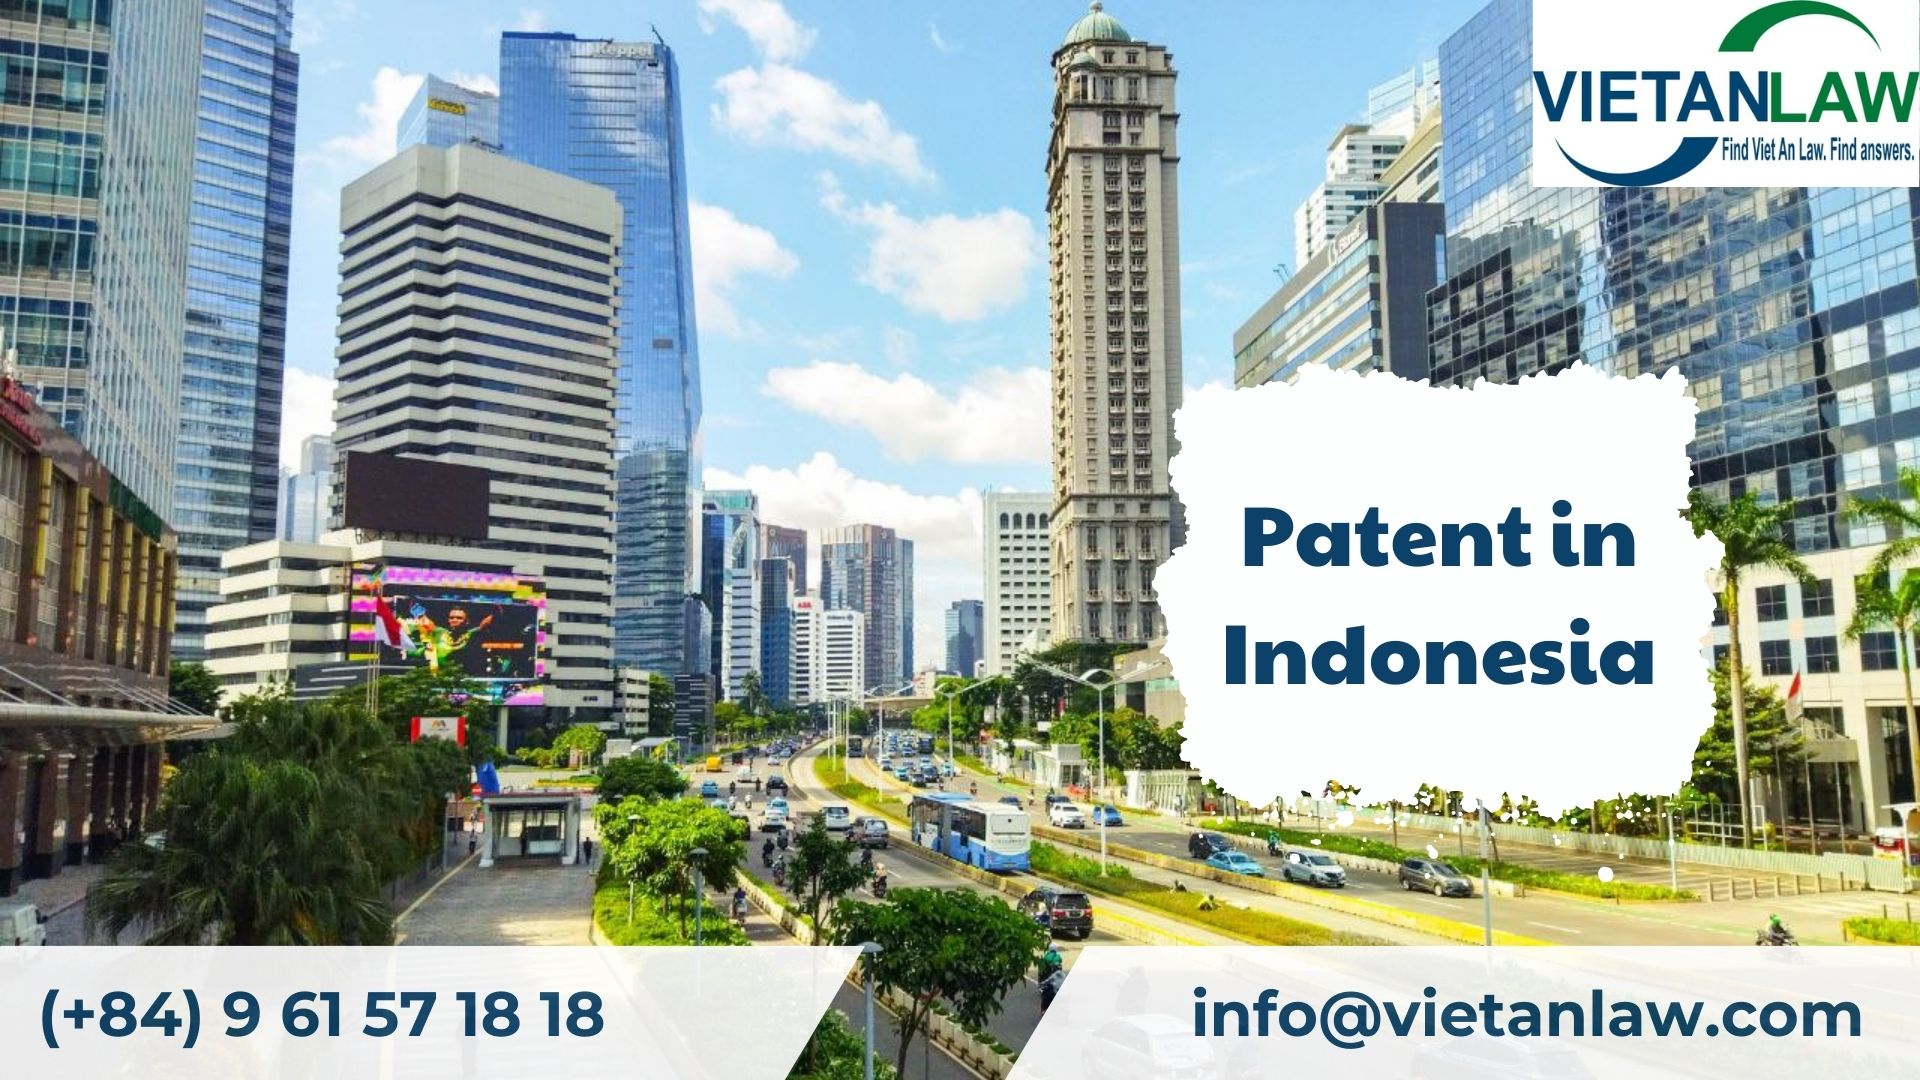 Patent registration in Indonesia